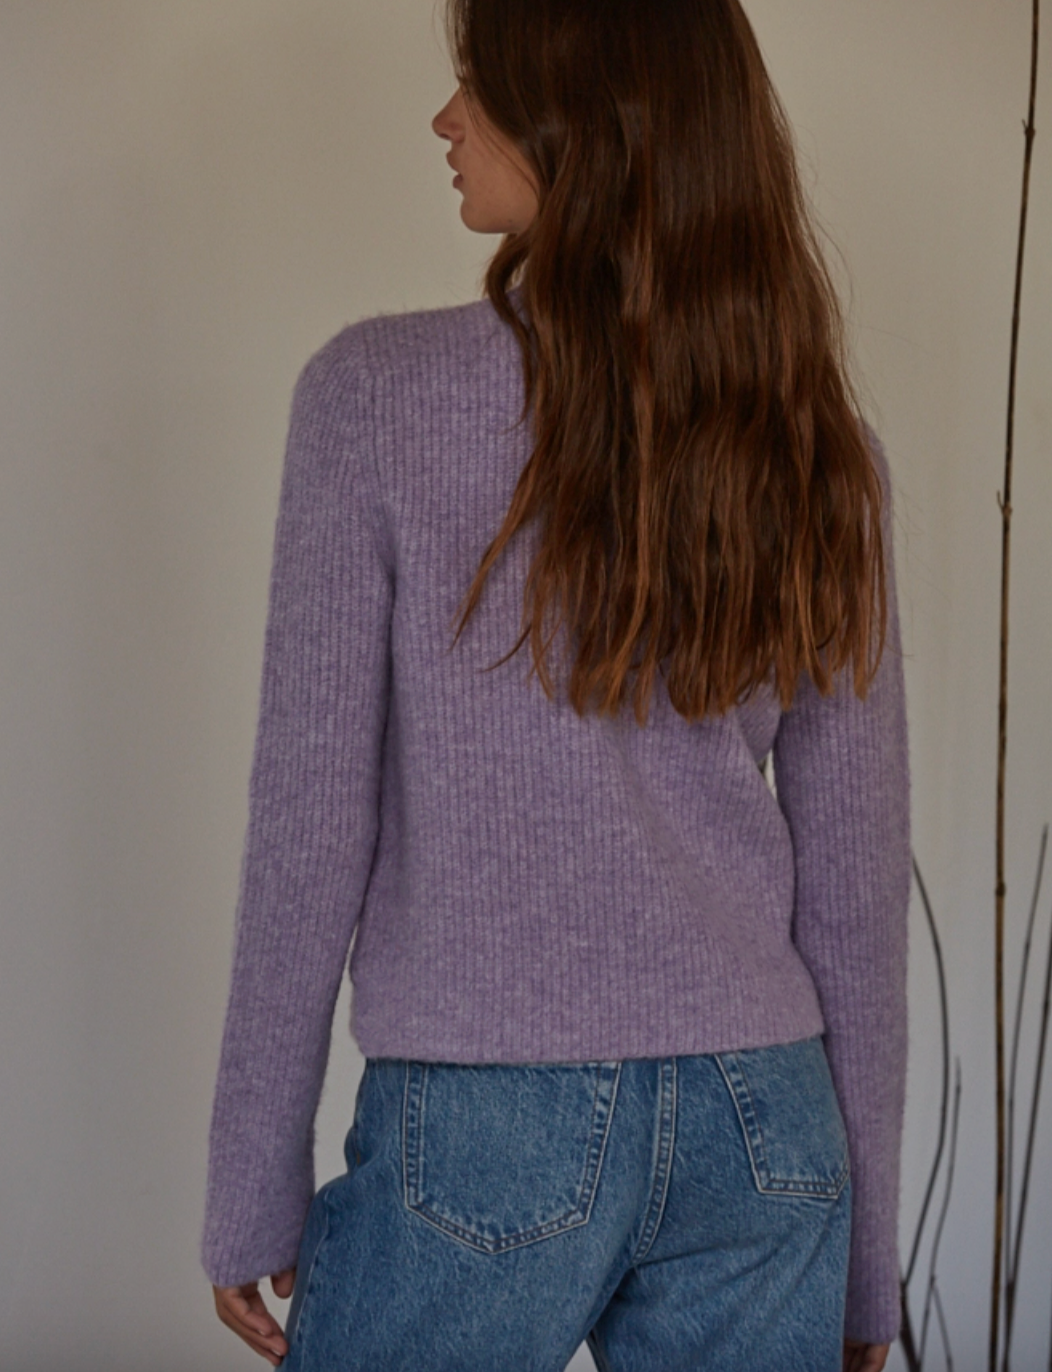 dancing in purple reign sweater